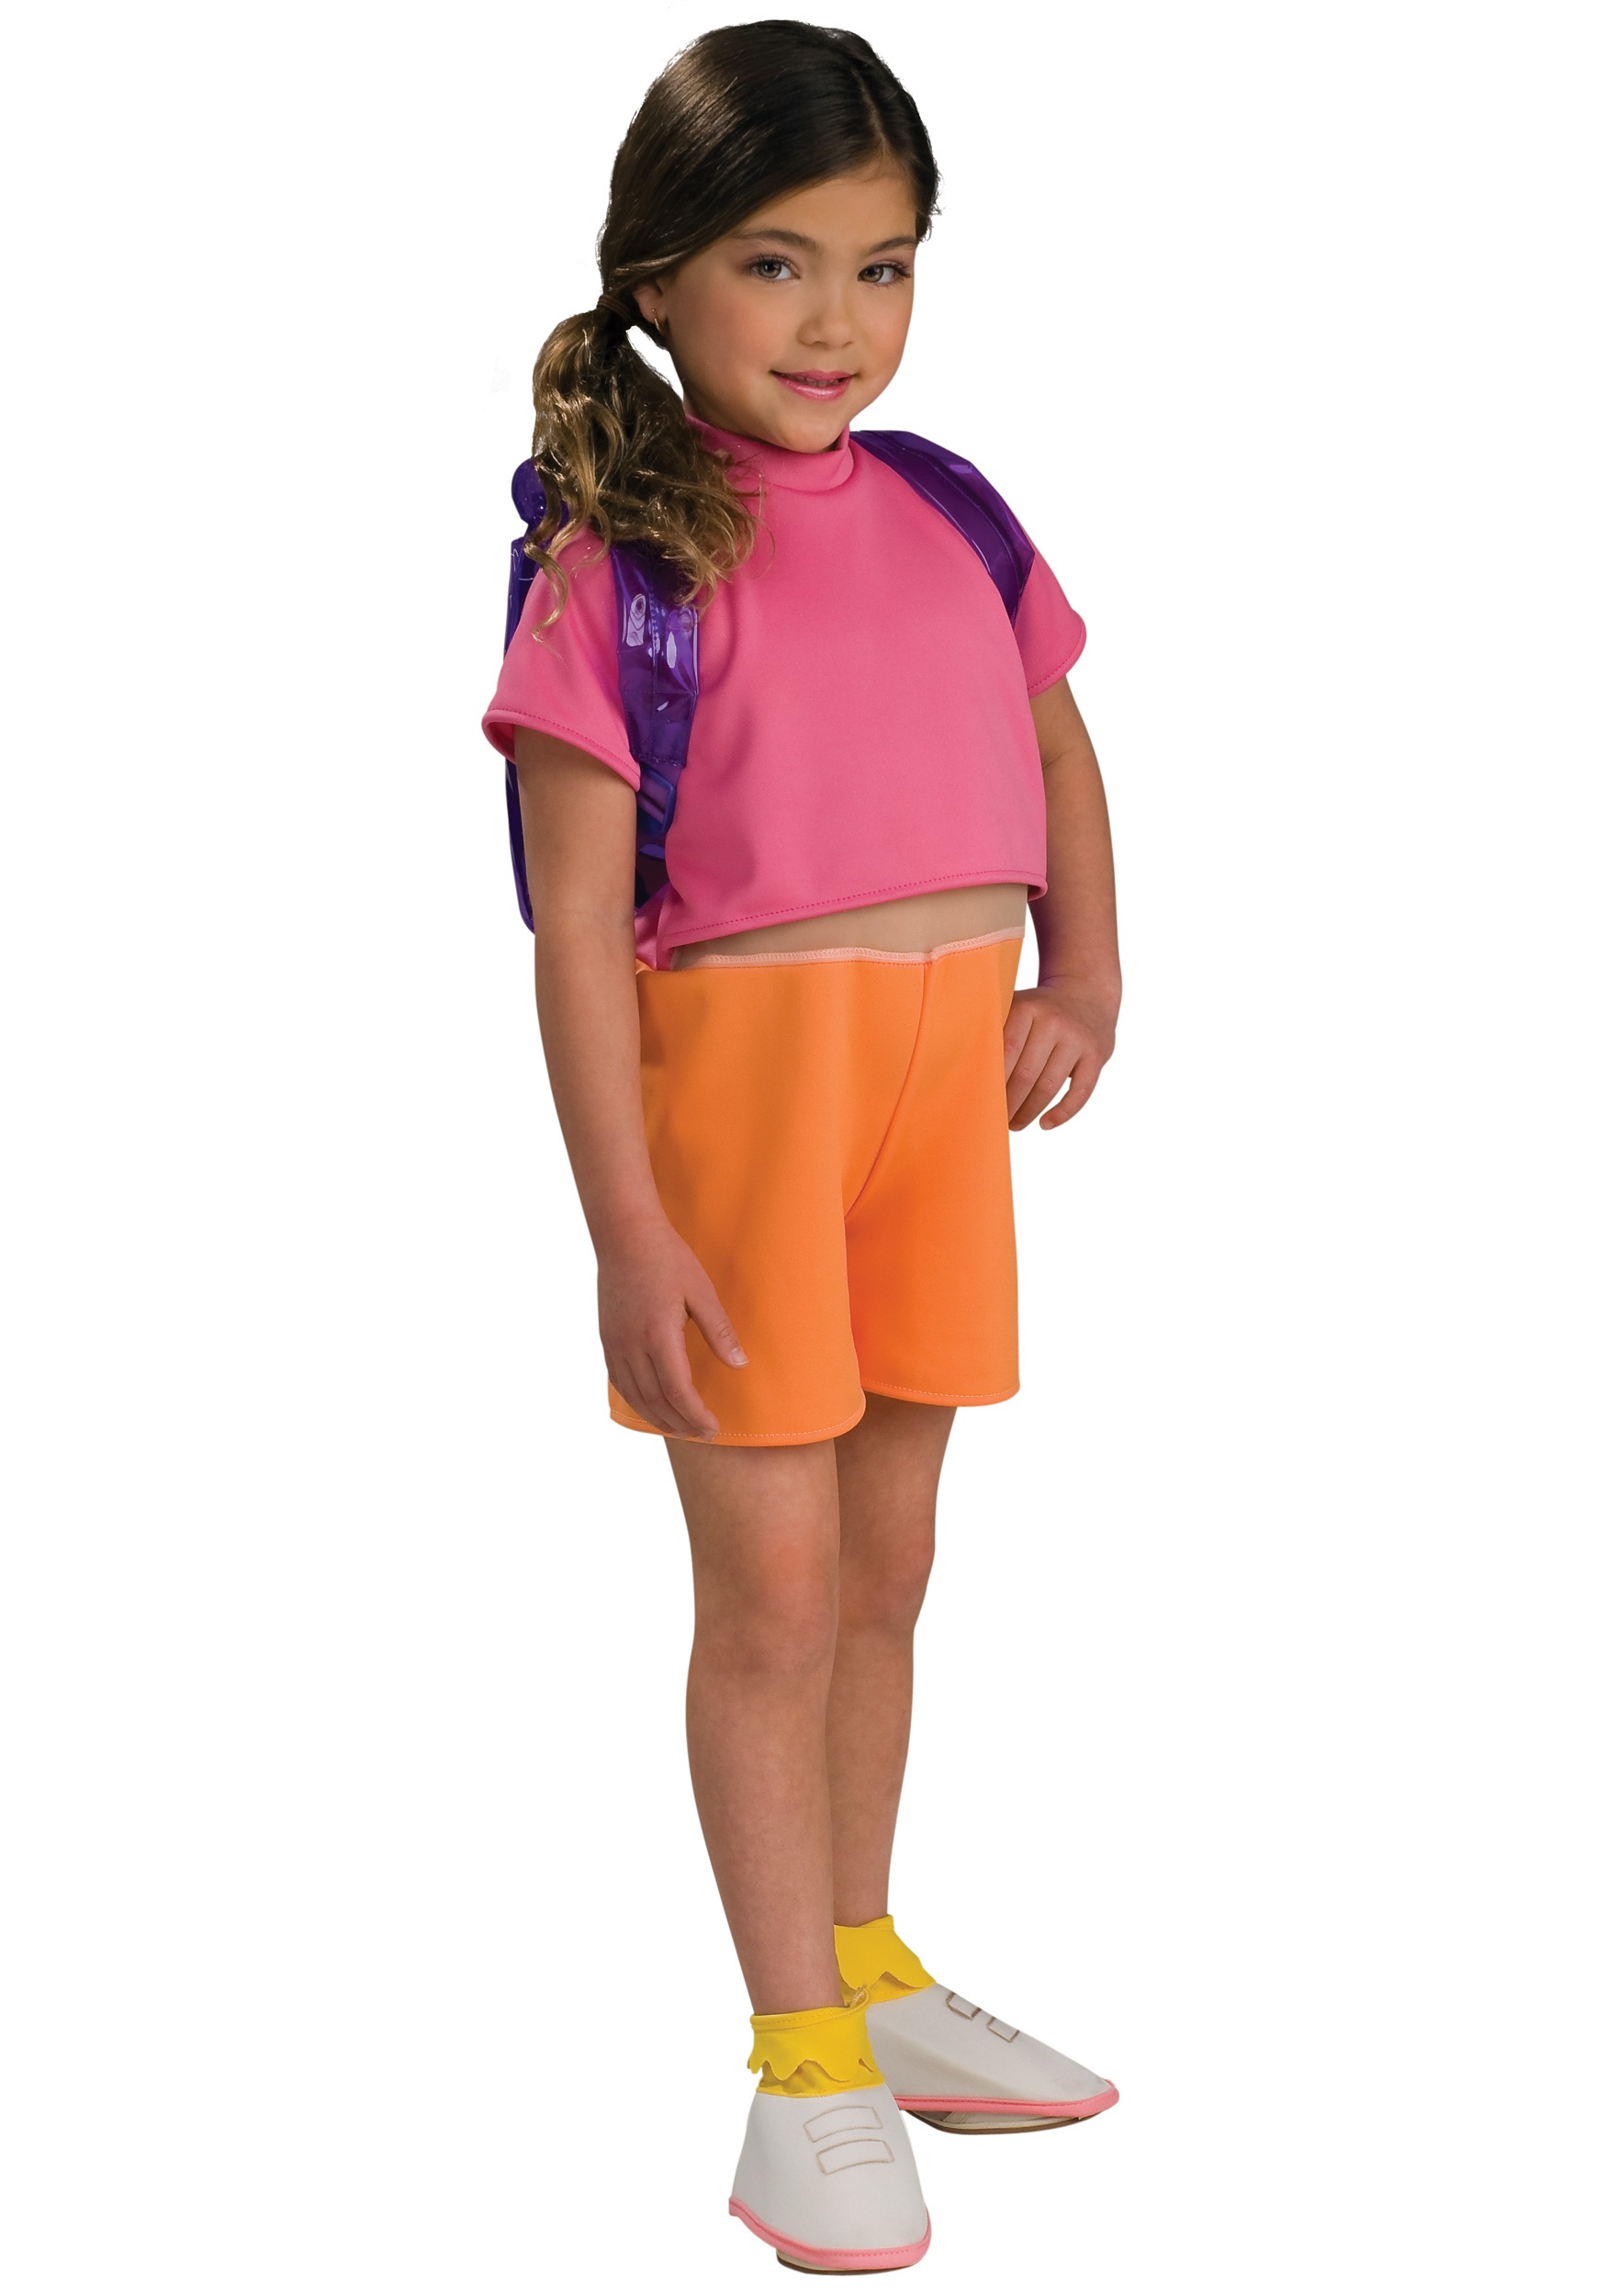 Dora Costumes for Kids.